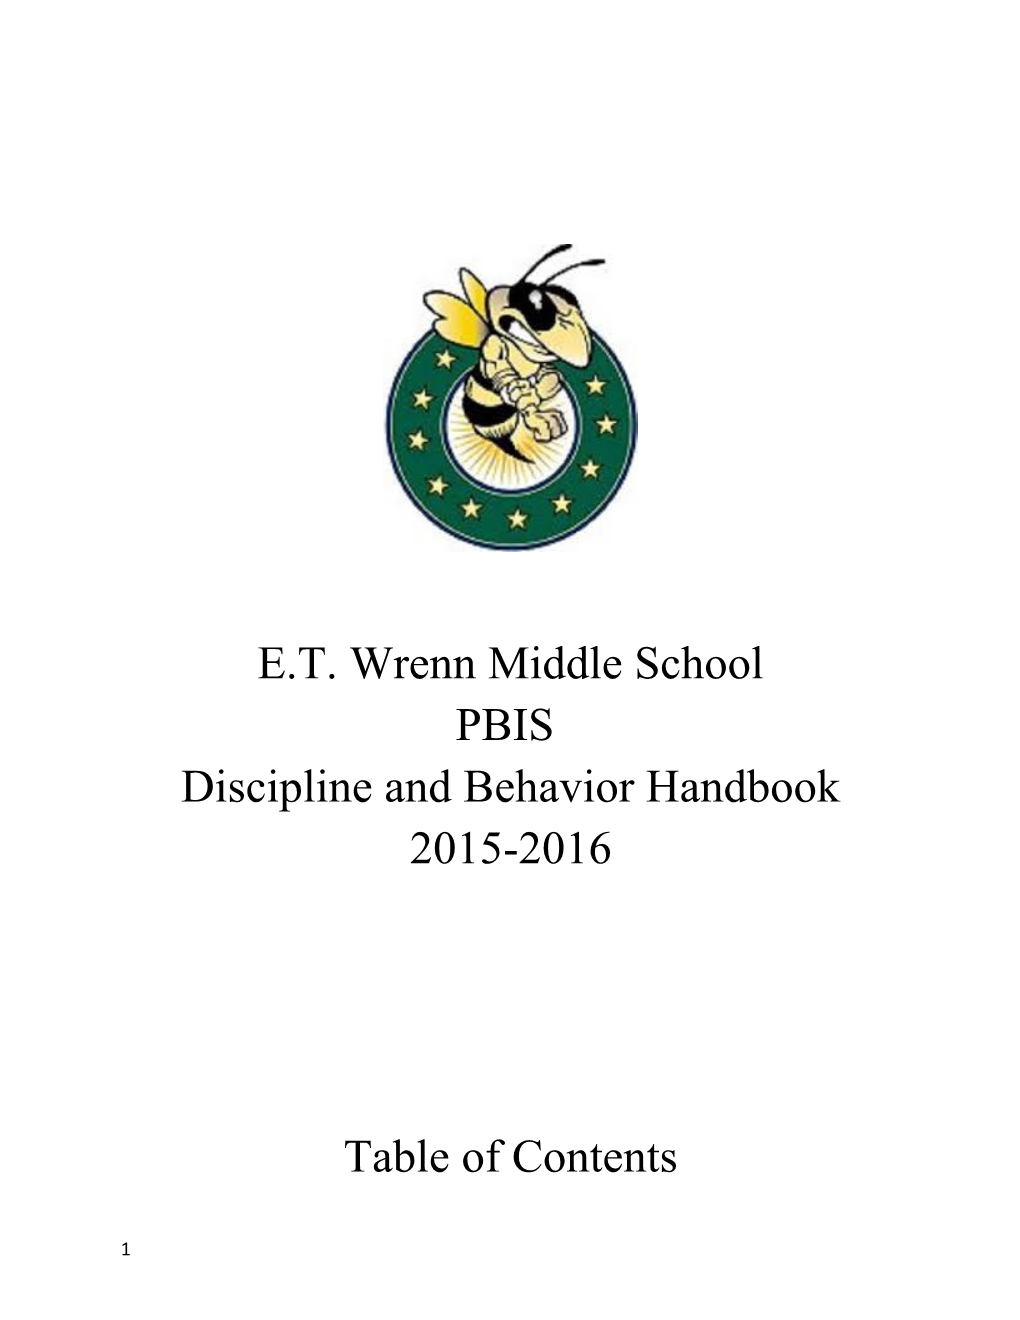 Discipline and Behavior Handbook